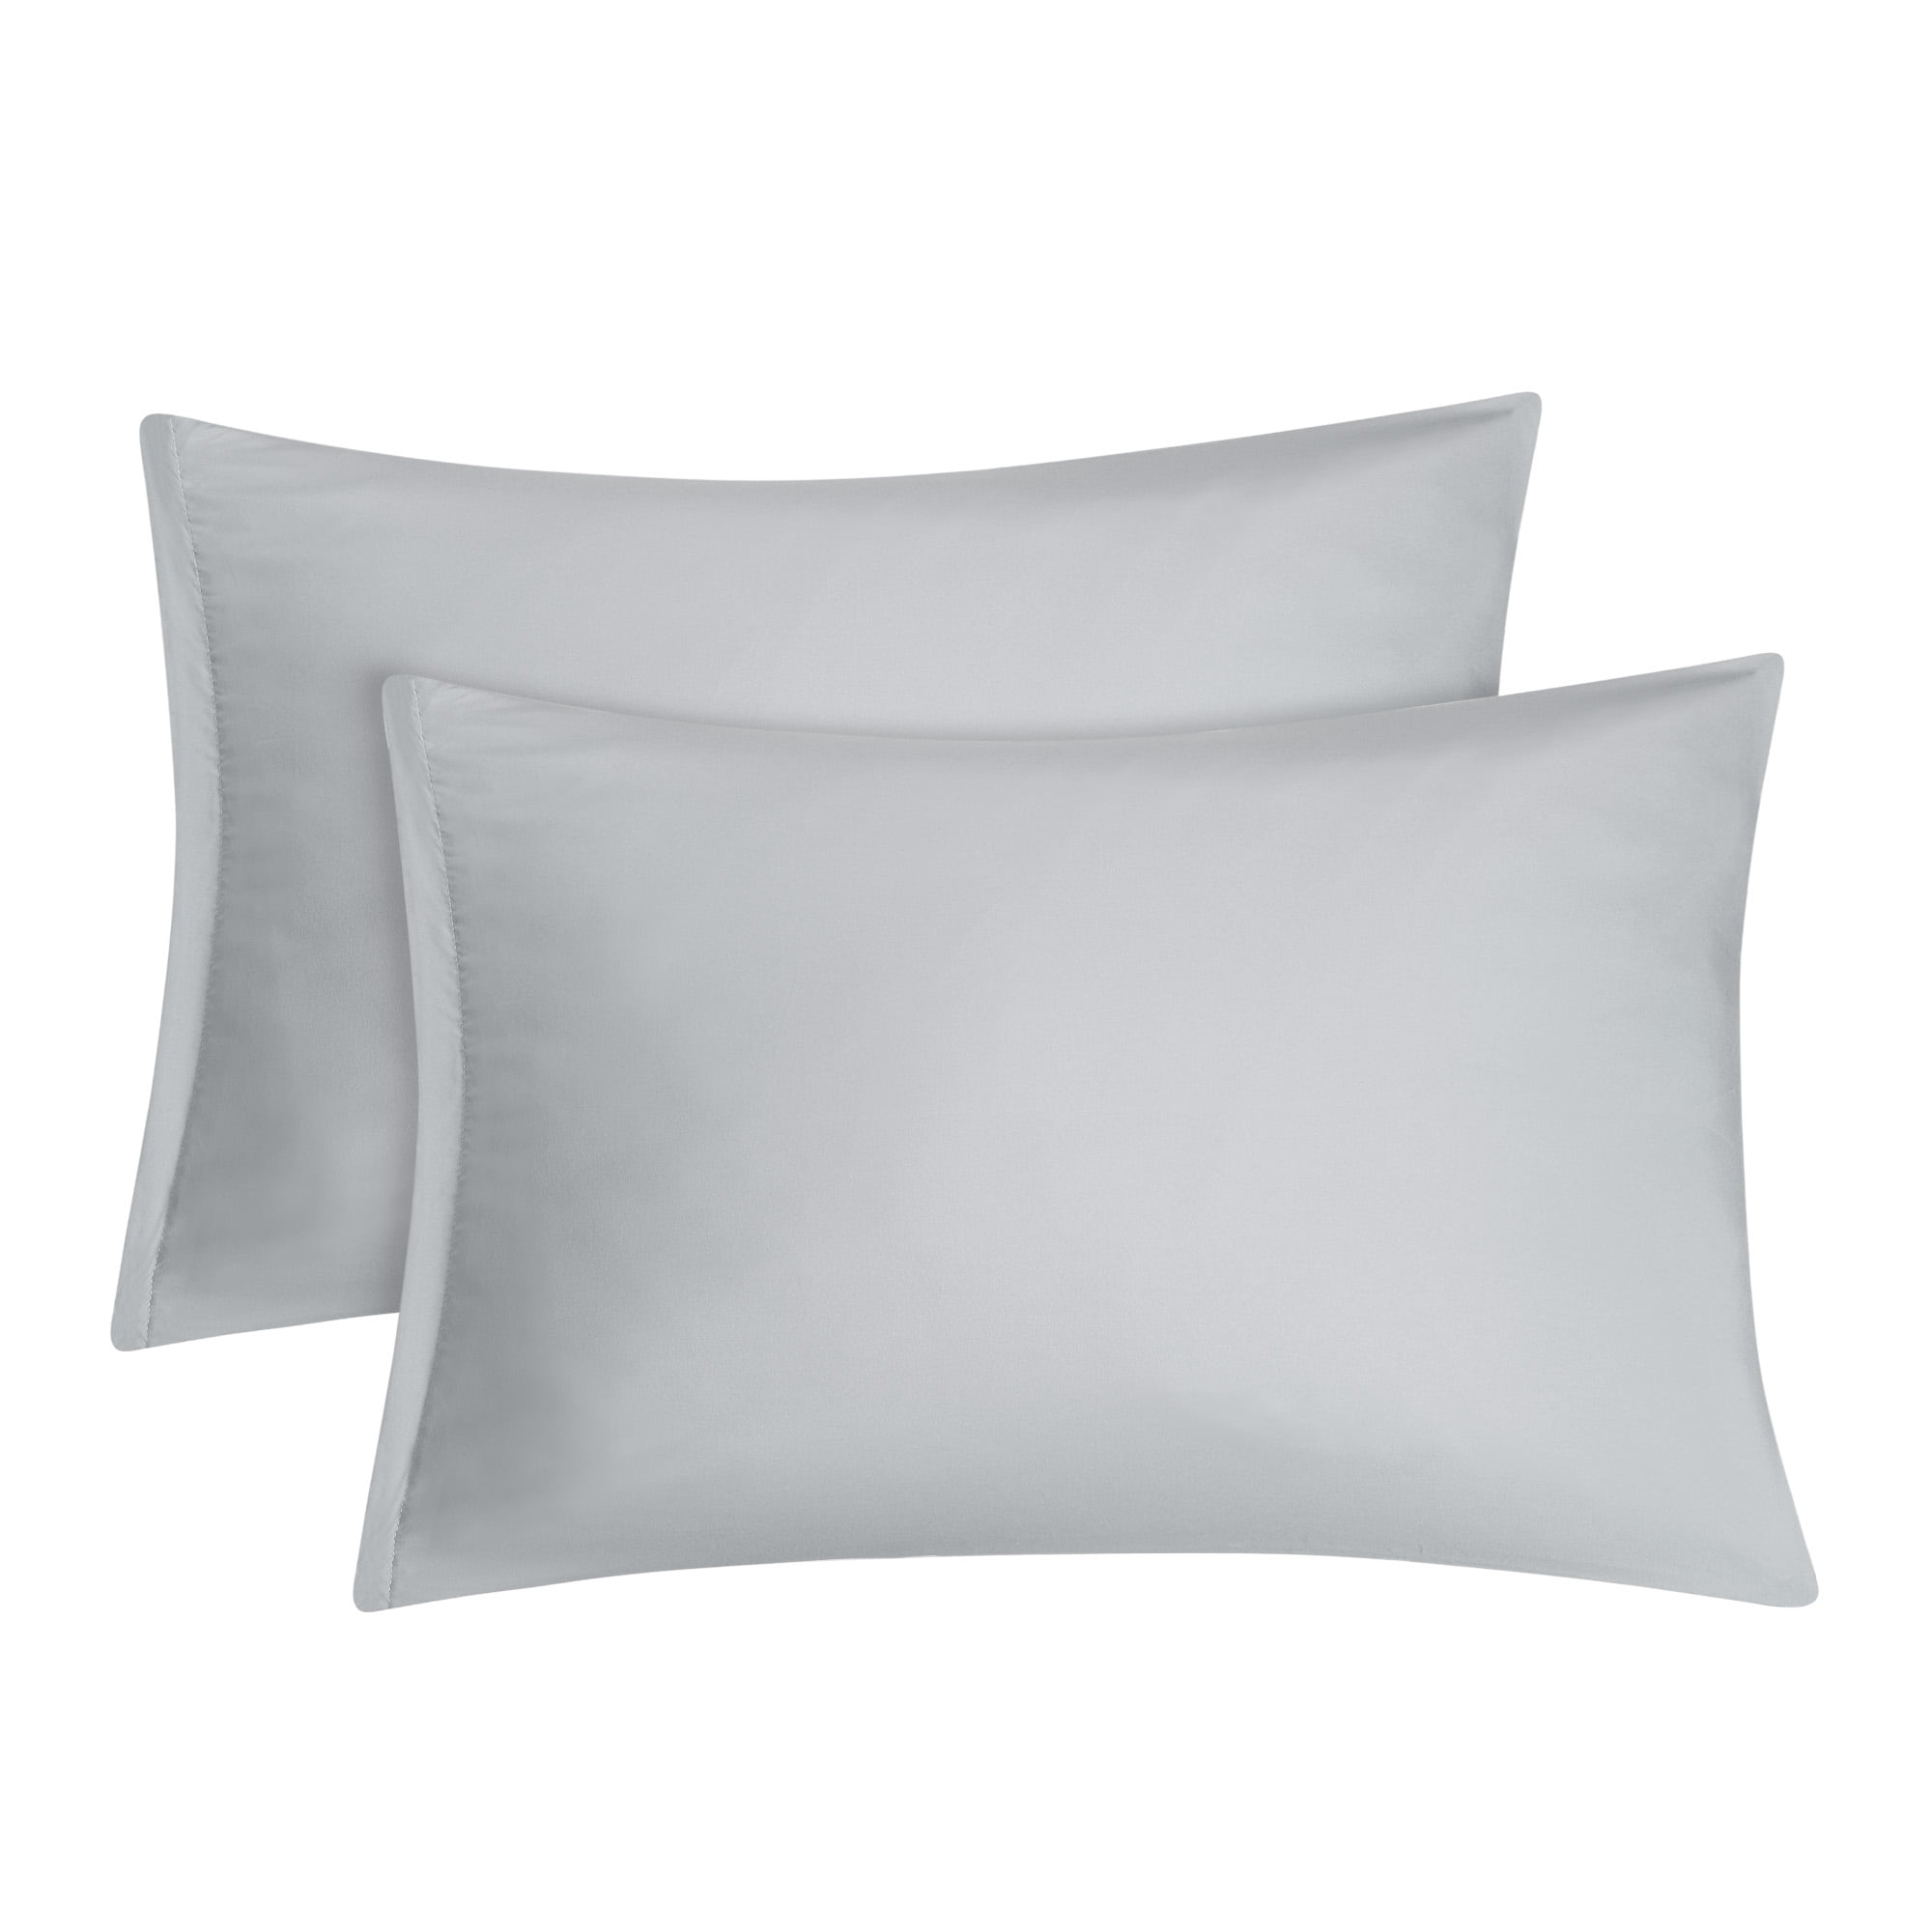 Black Travel Pillow Cover Case 14”X 20” Pillow Zipper Pillowcase AllerEase New i 